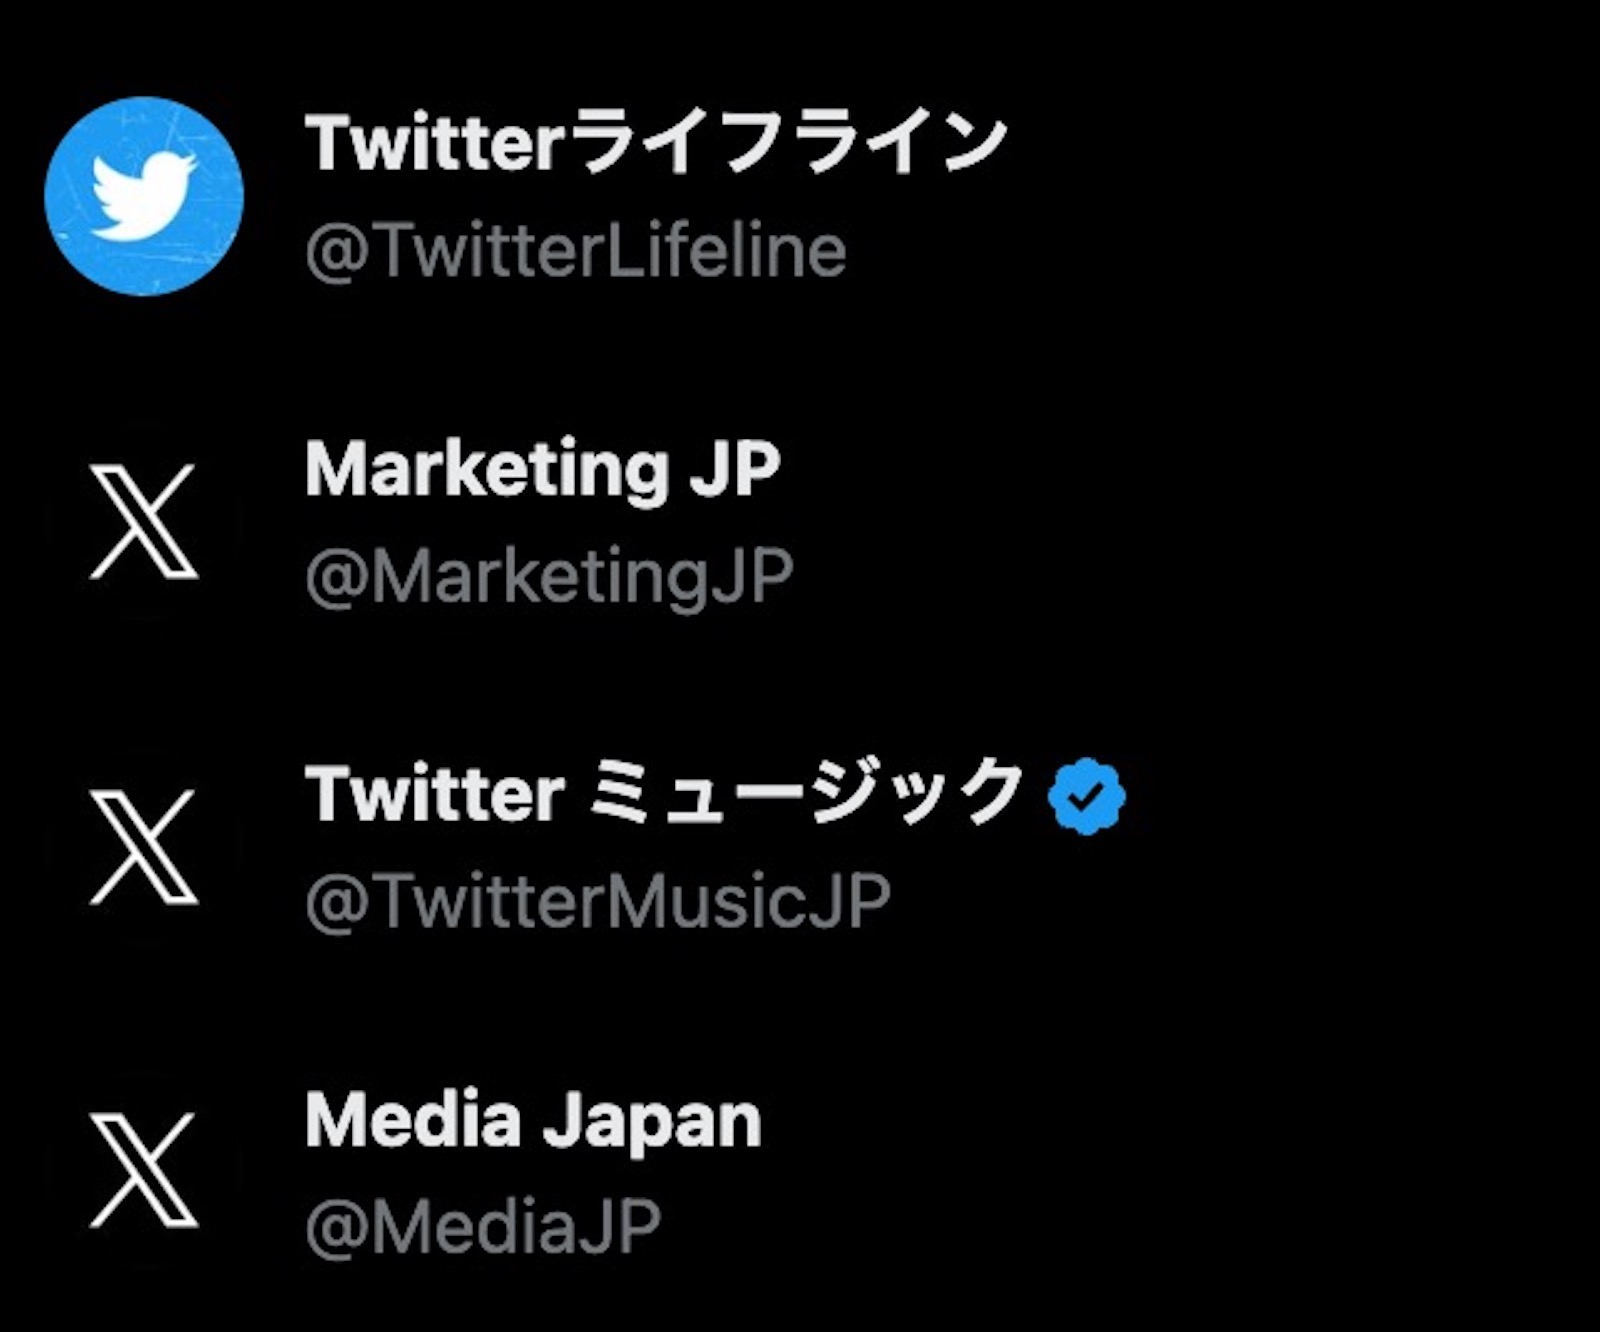 Twitter-Accounts.jpg